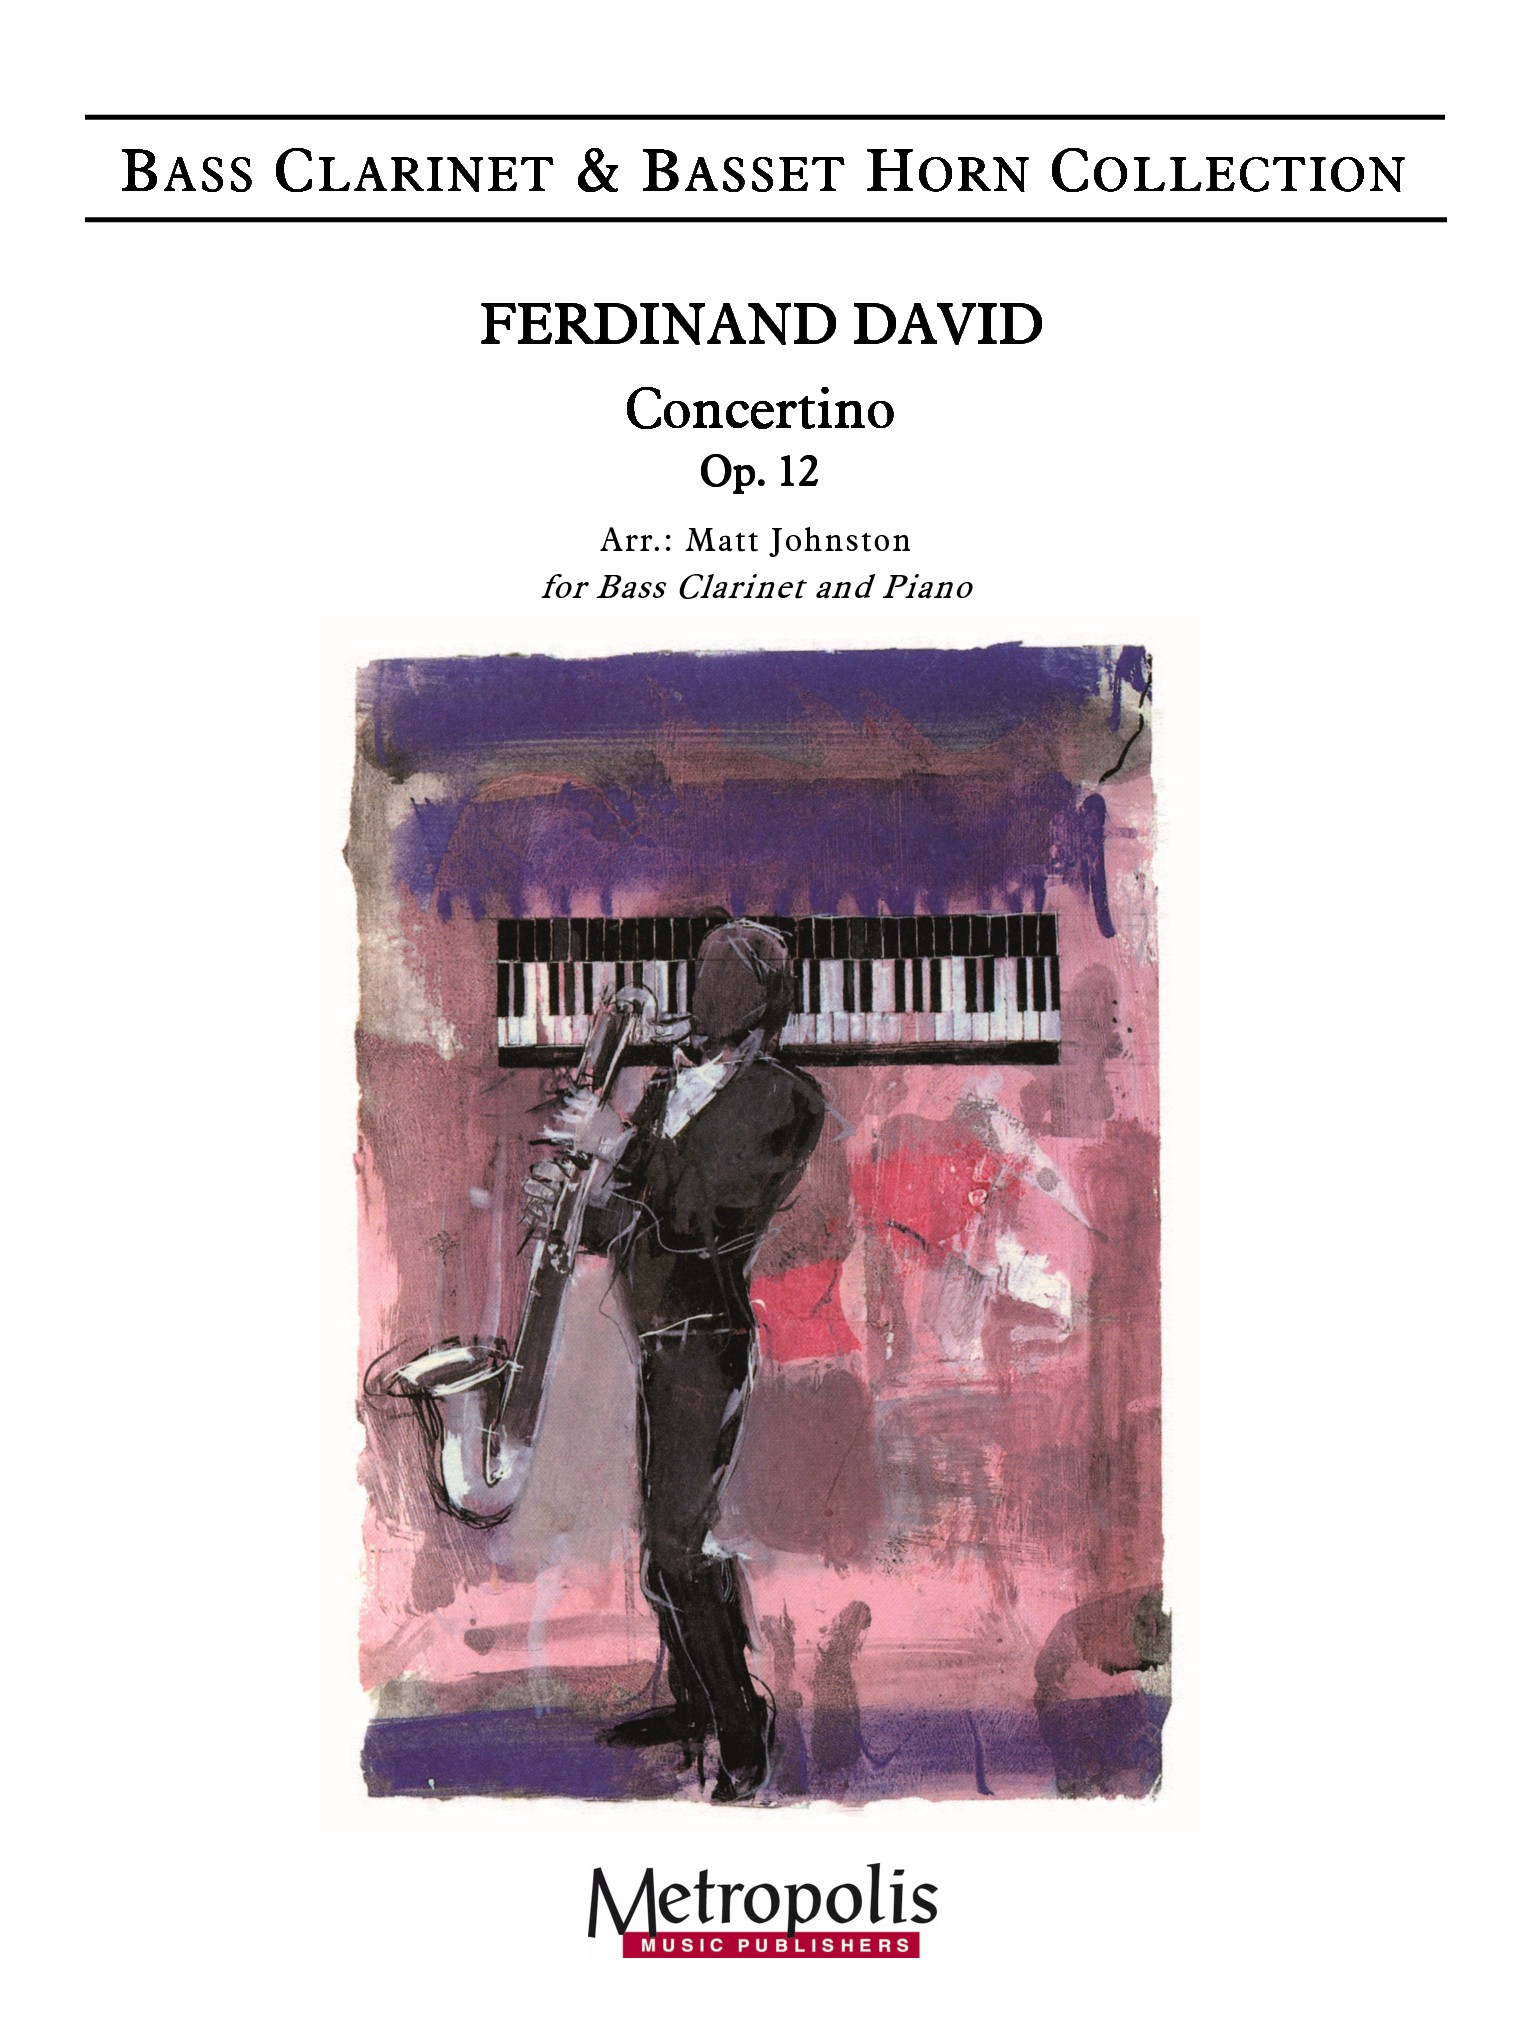 Concertino, Op. 12 (DAVID FERDINAND)